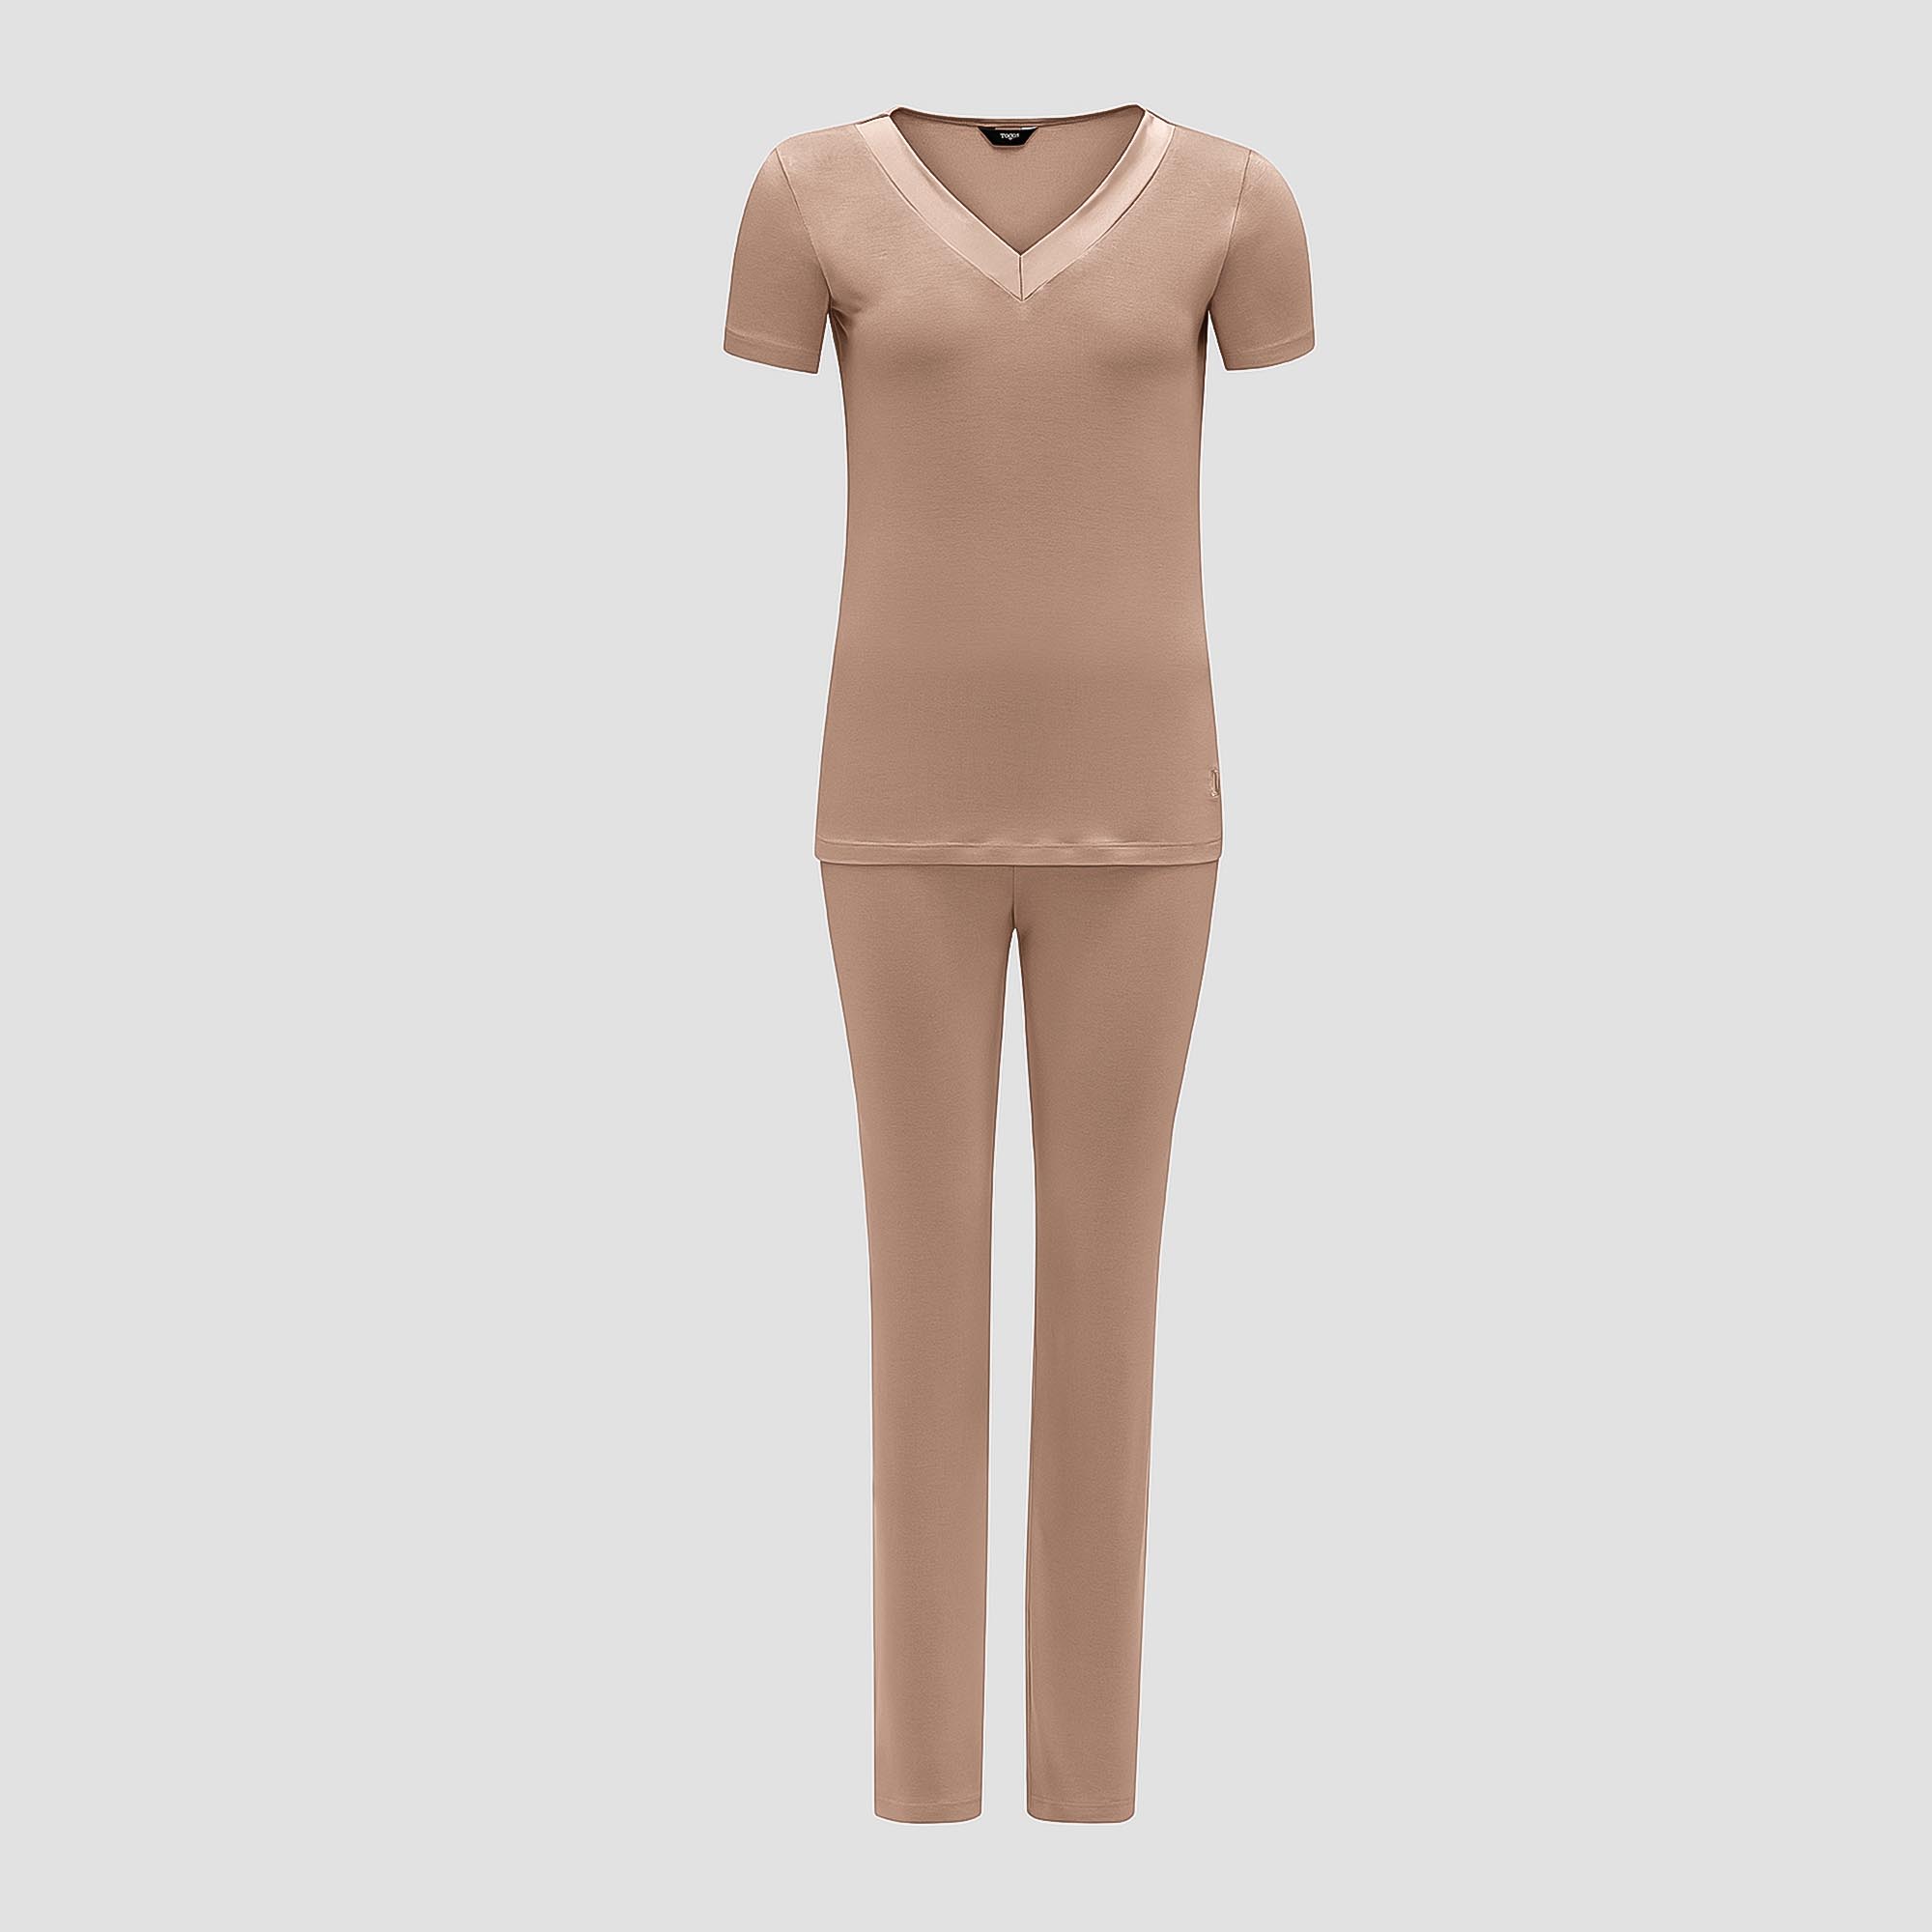 Пижама Togas Ингелла розово-бежевая женская XL(50) 2 предмета муж пижама гранж индиго р 48